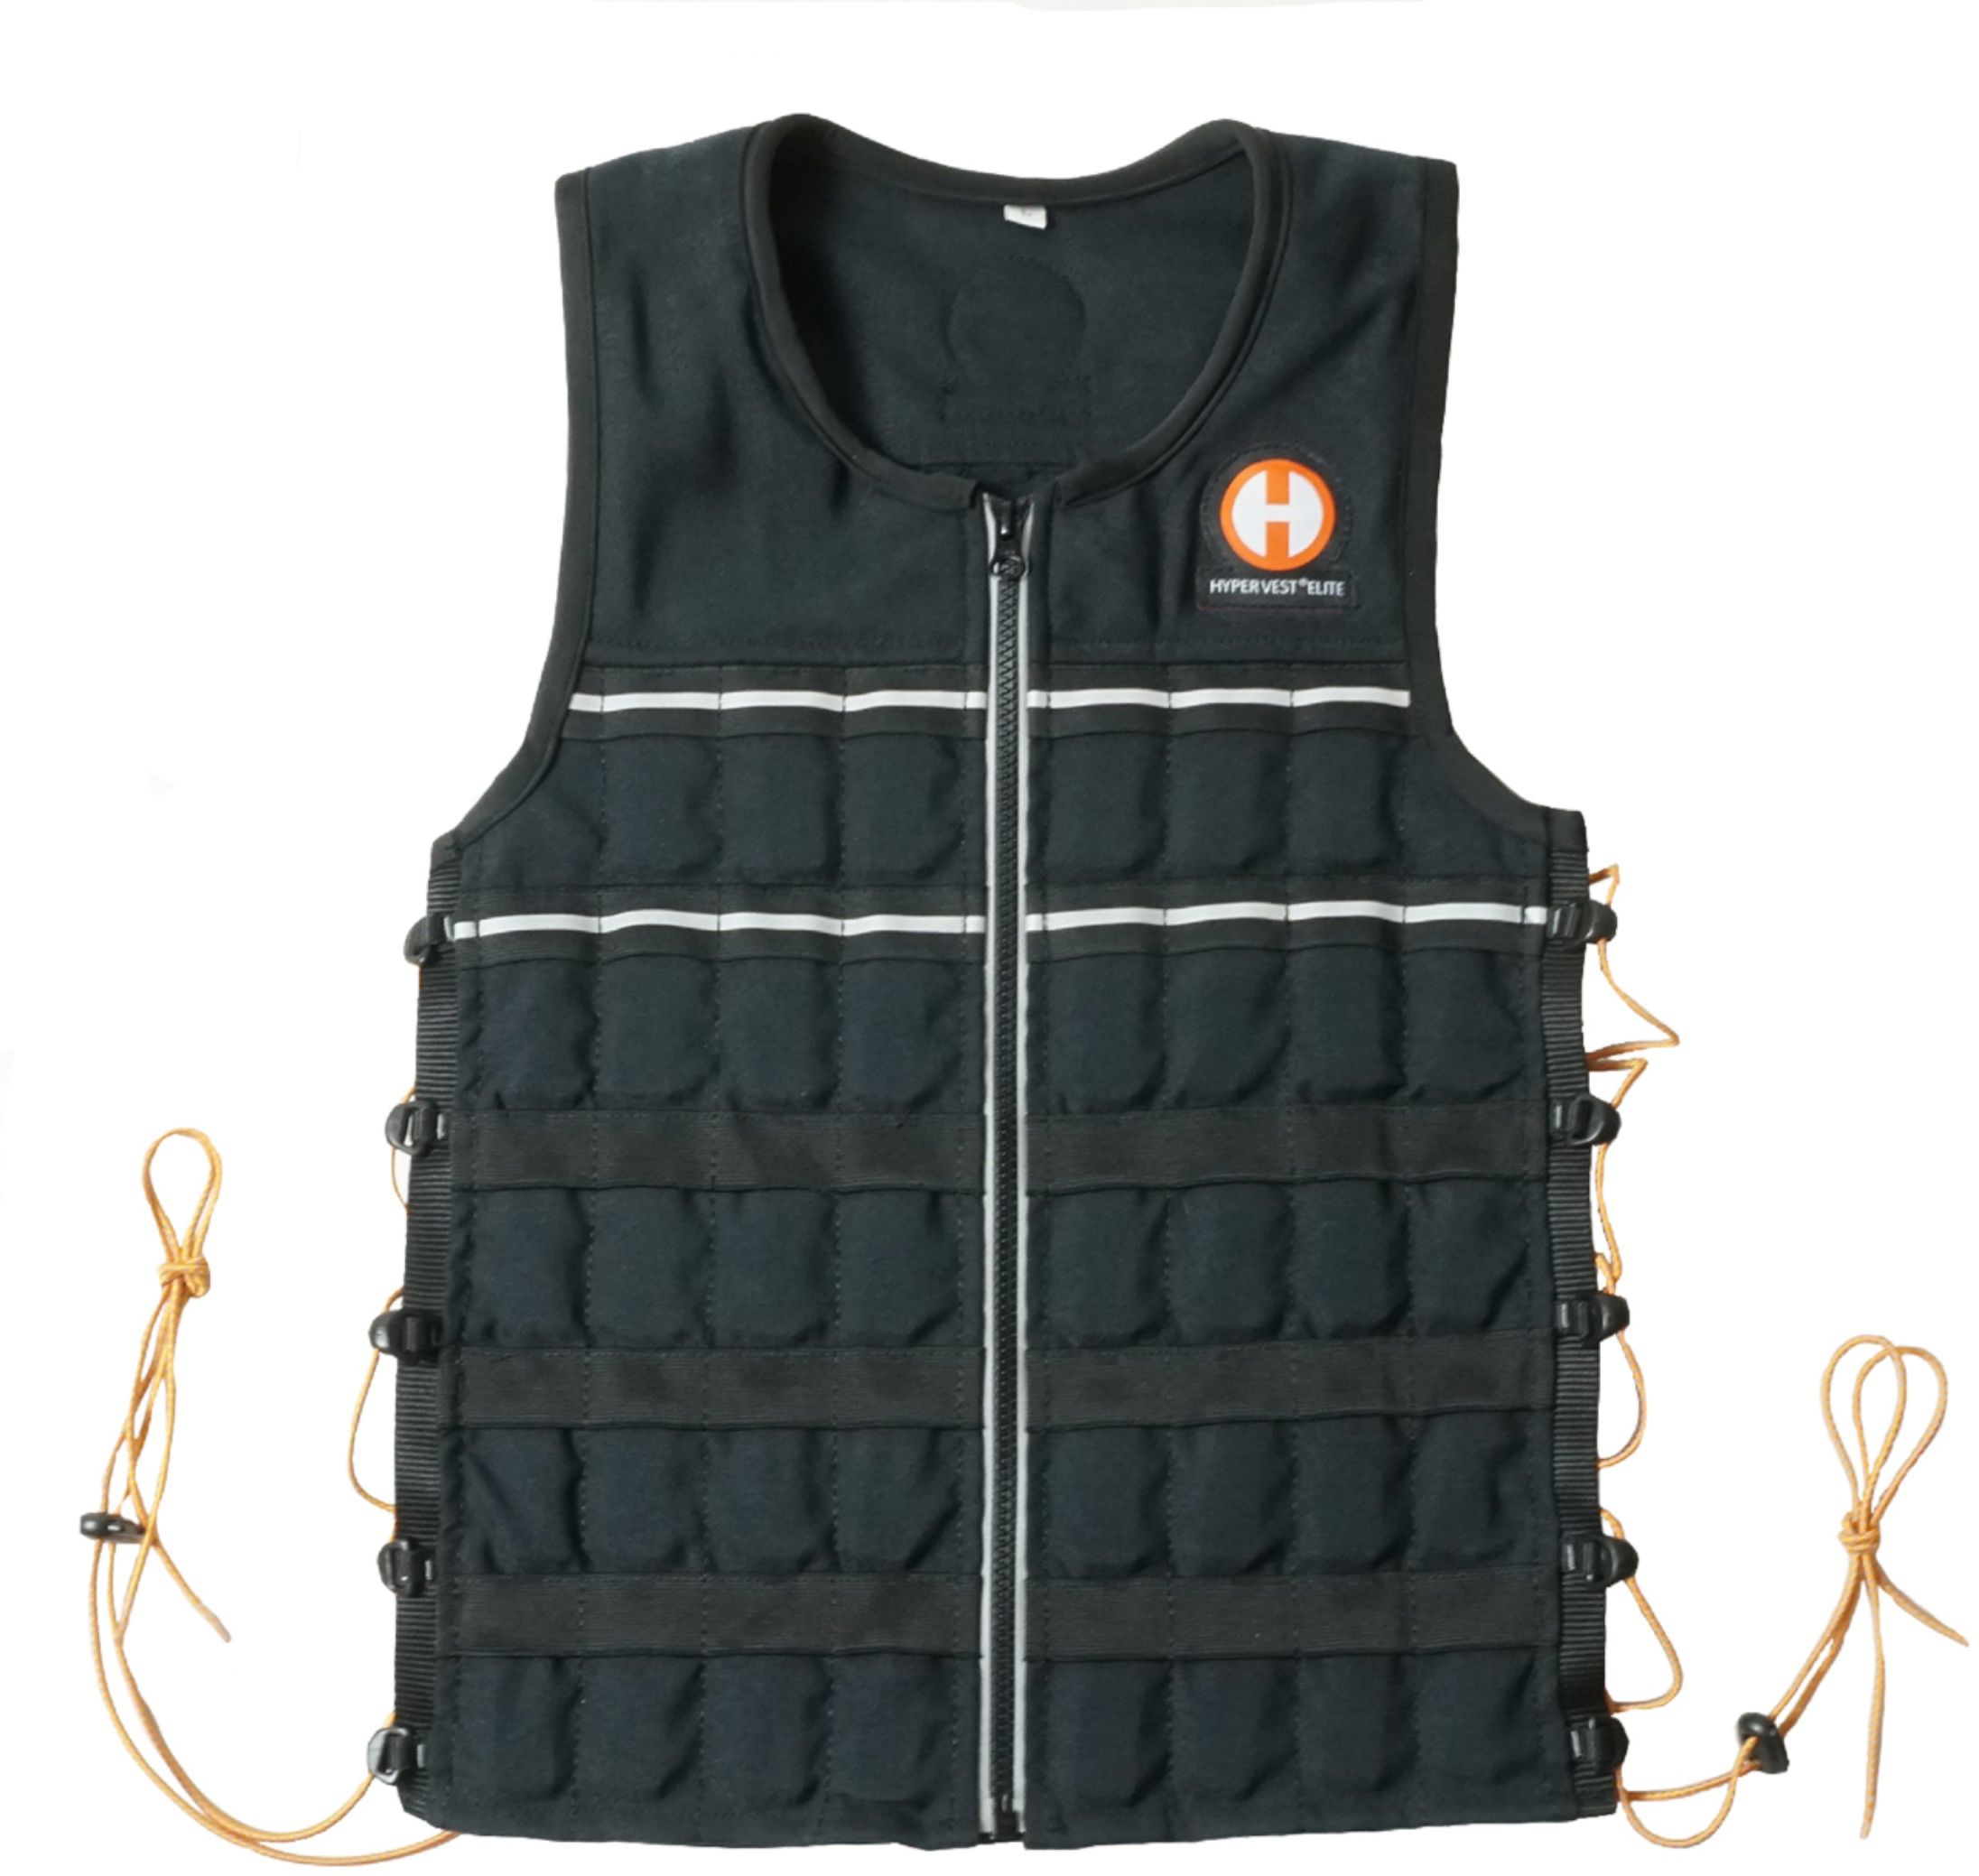 Angle View: HyperWear - Hyper Vest ELITE thin 10lb unisex weight vest - Black